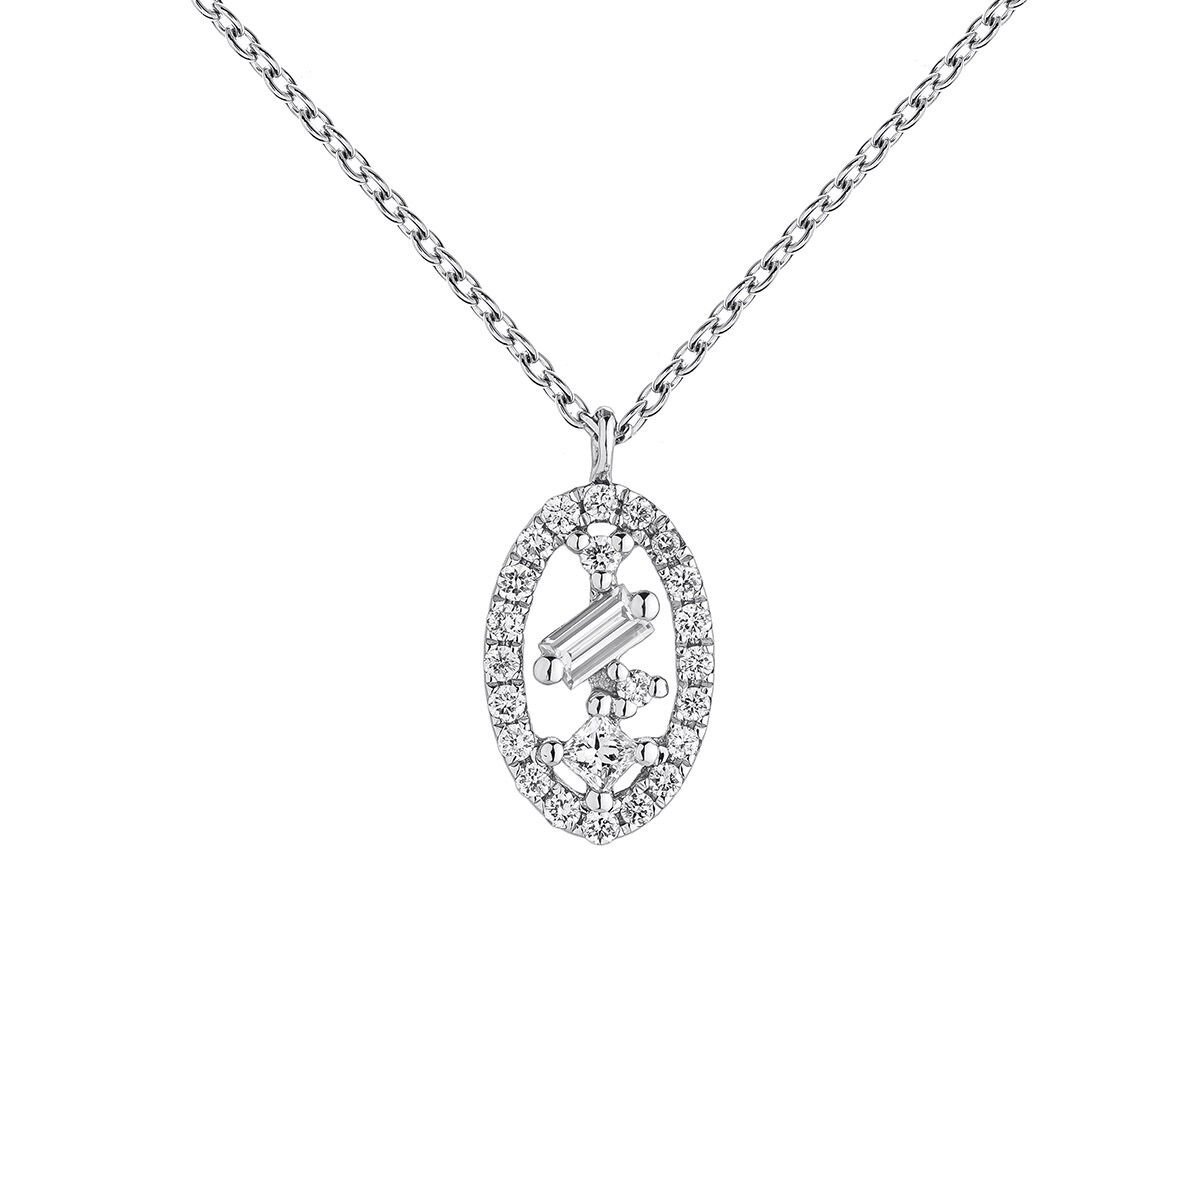 Oval pendant in 18k white gold with diamonds and pavé-set diamonds, J05118-01, hi-res